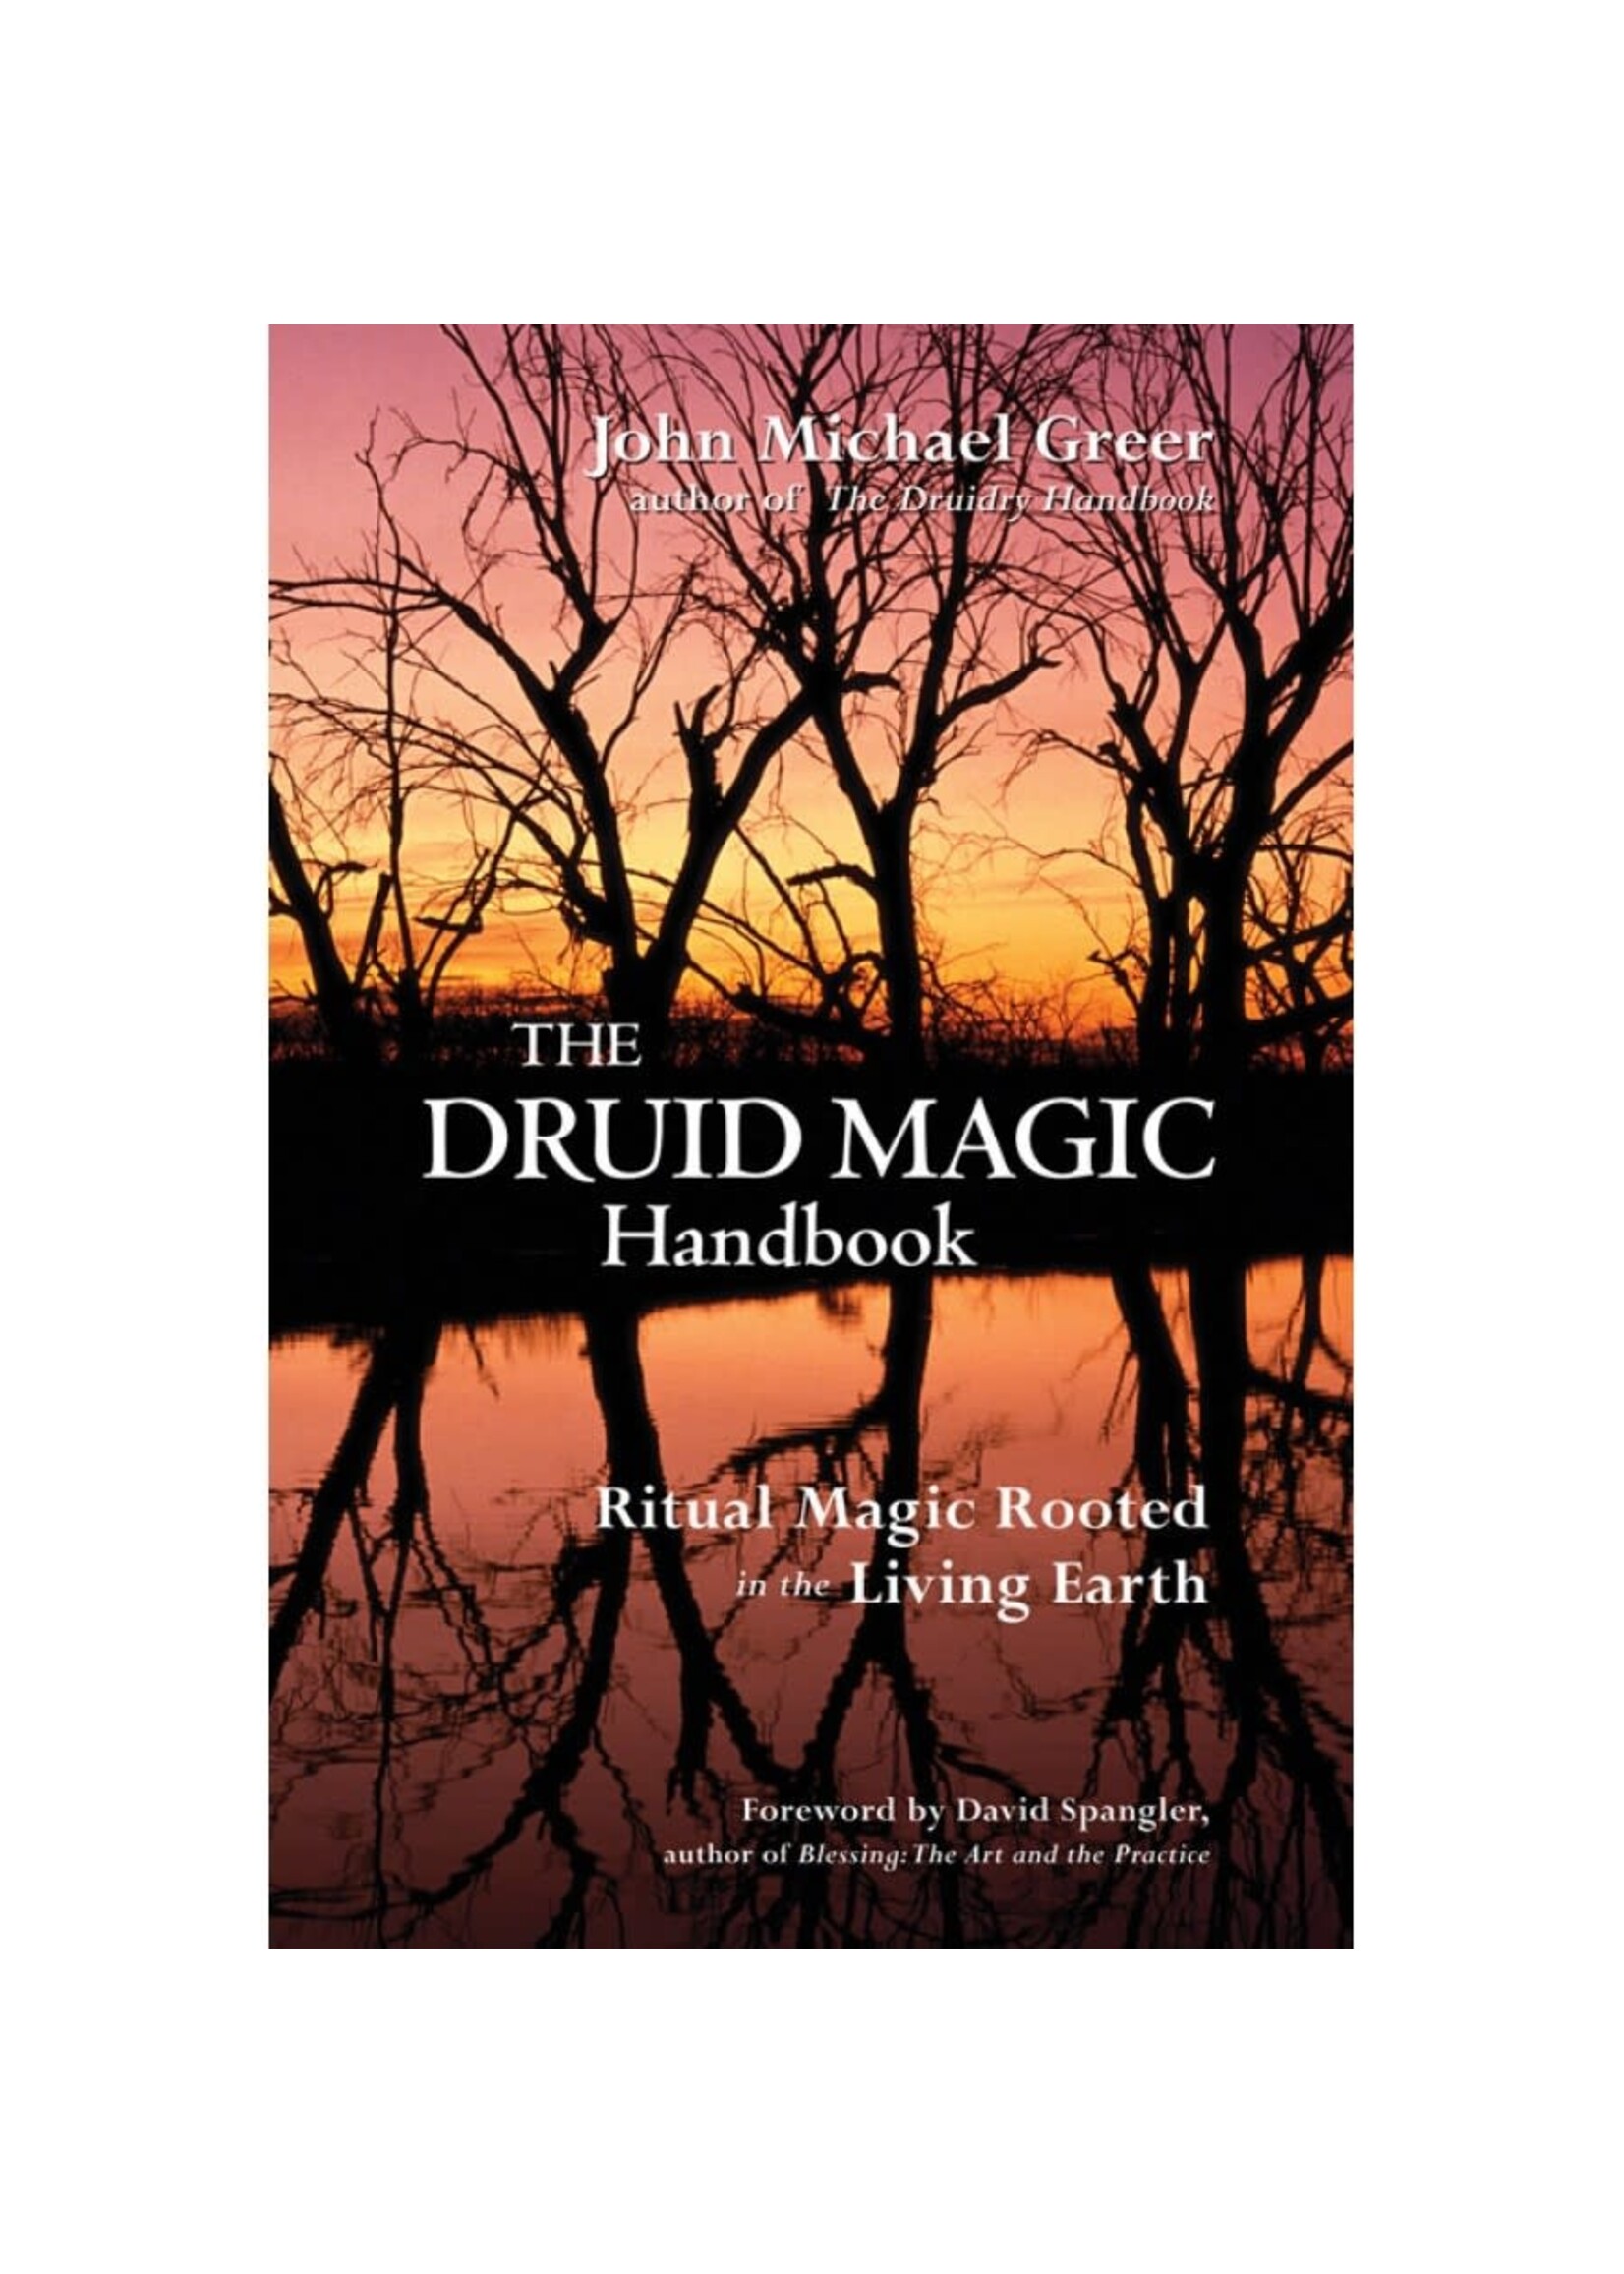 The Druid Magic Handbook: Ritual Magic Rooted in the Living Earth by John Michael Greer